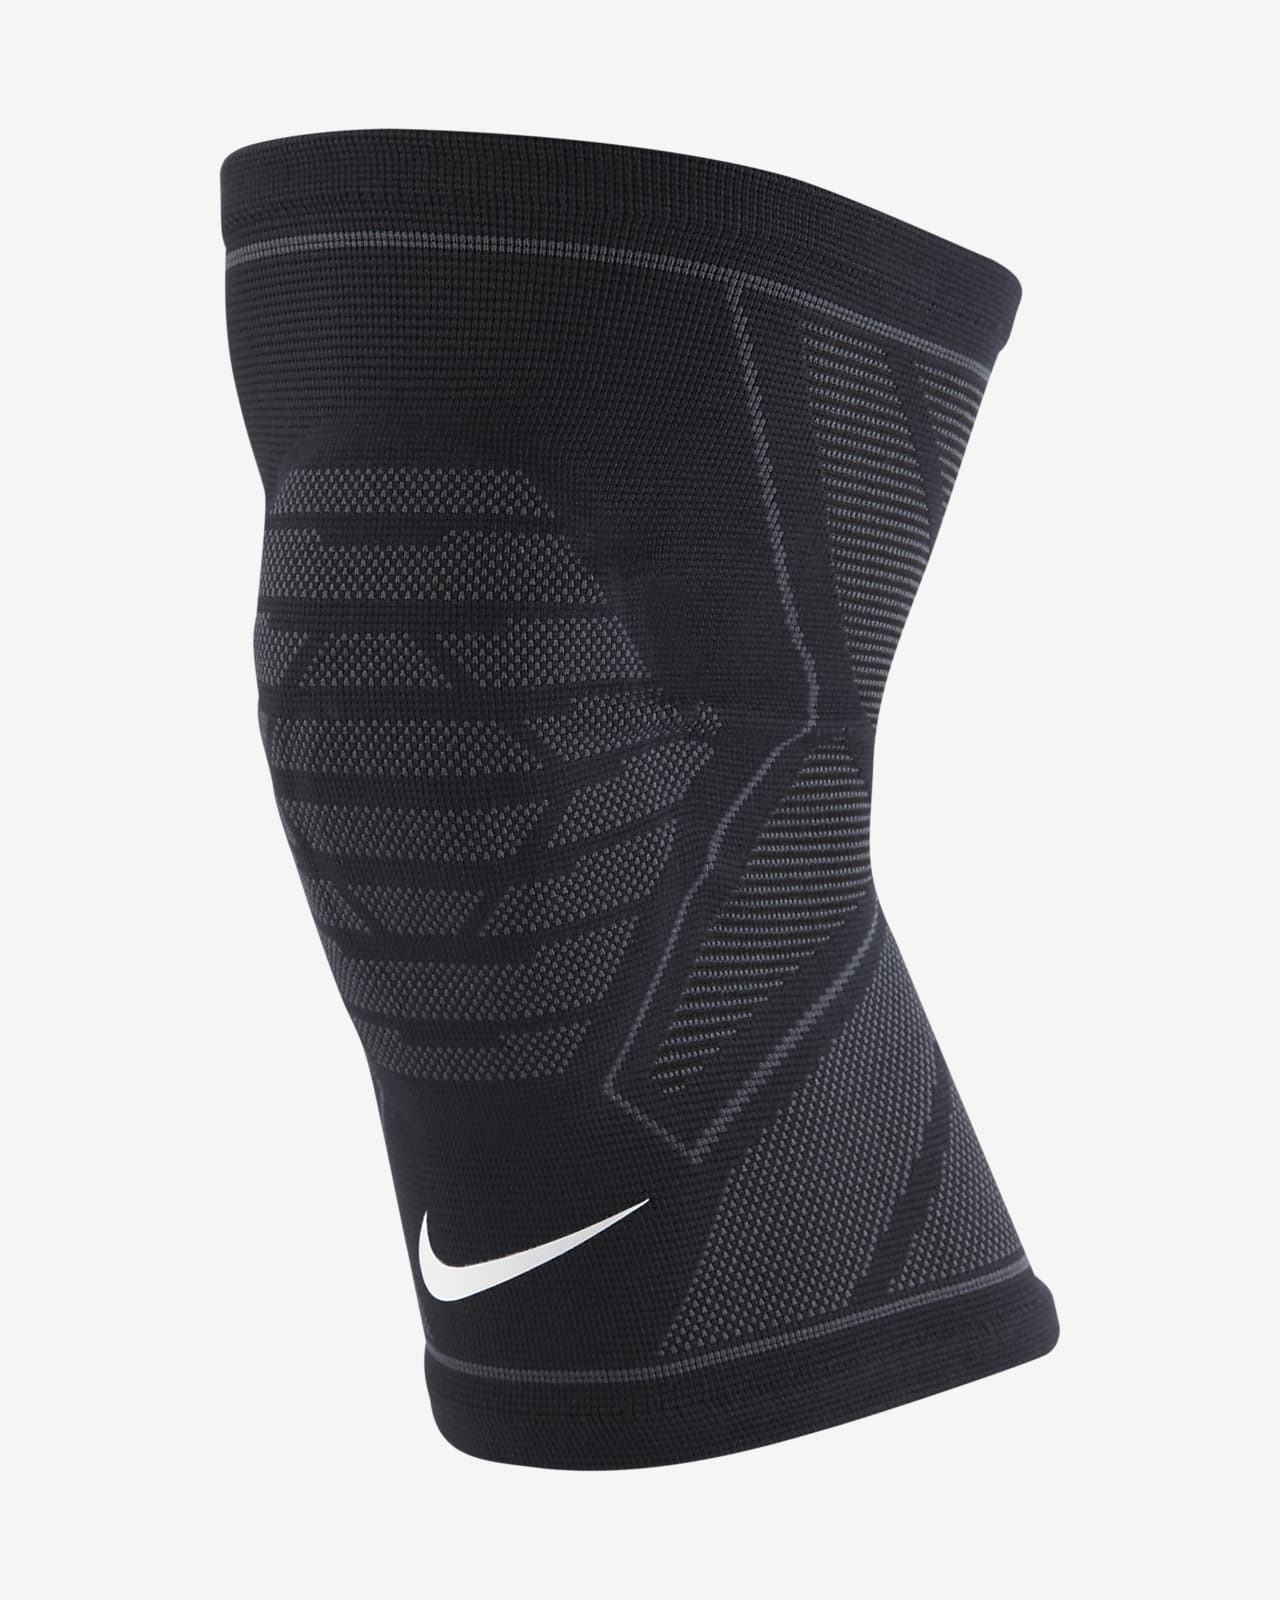 Rodillera tejida Nike Pro. Nike.com